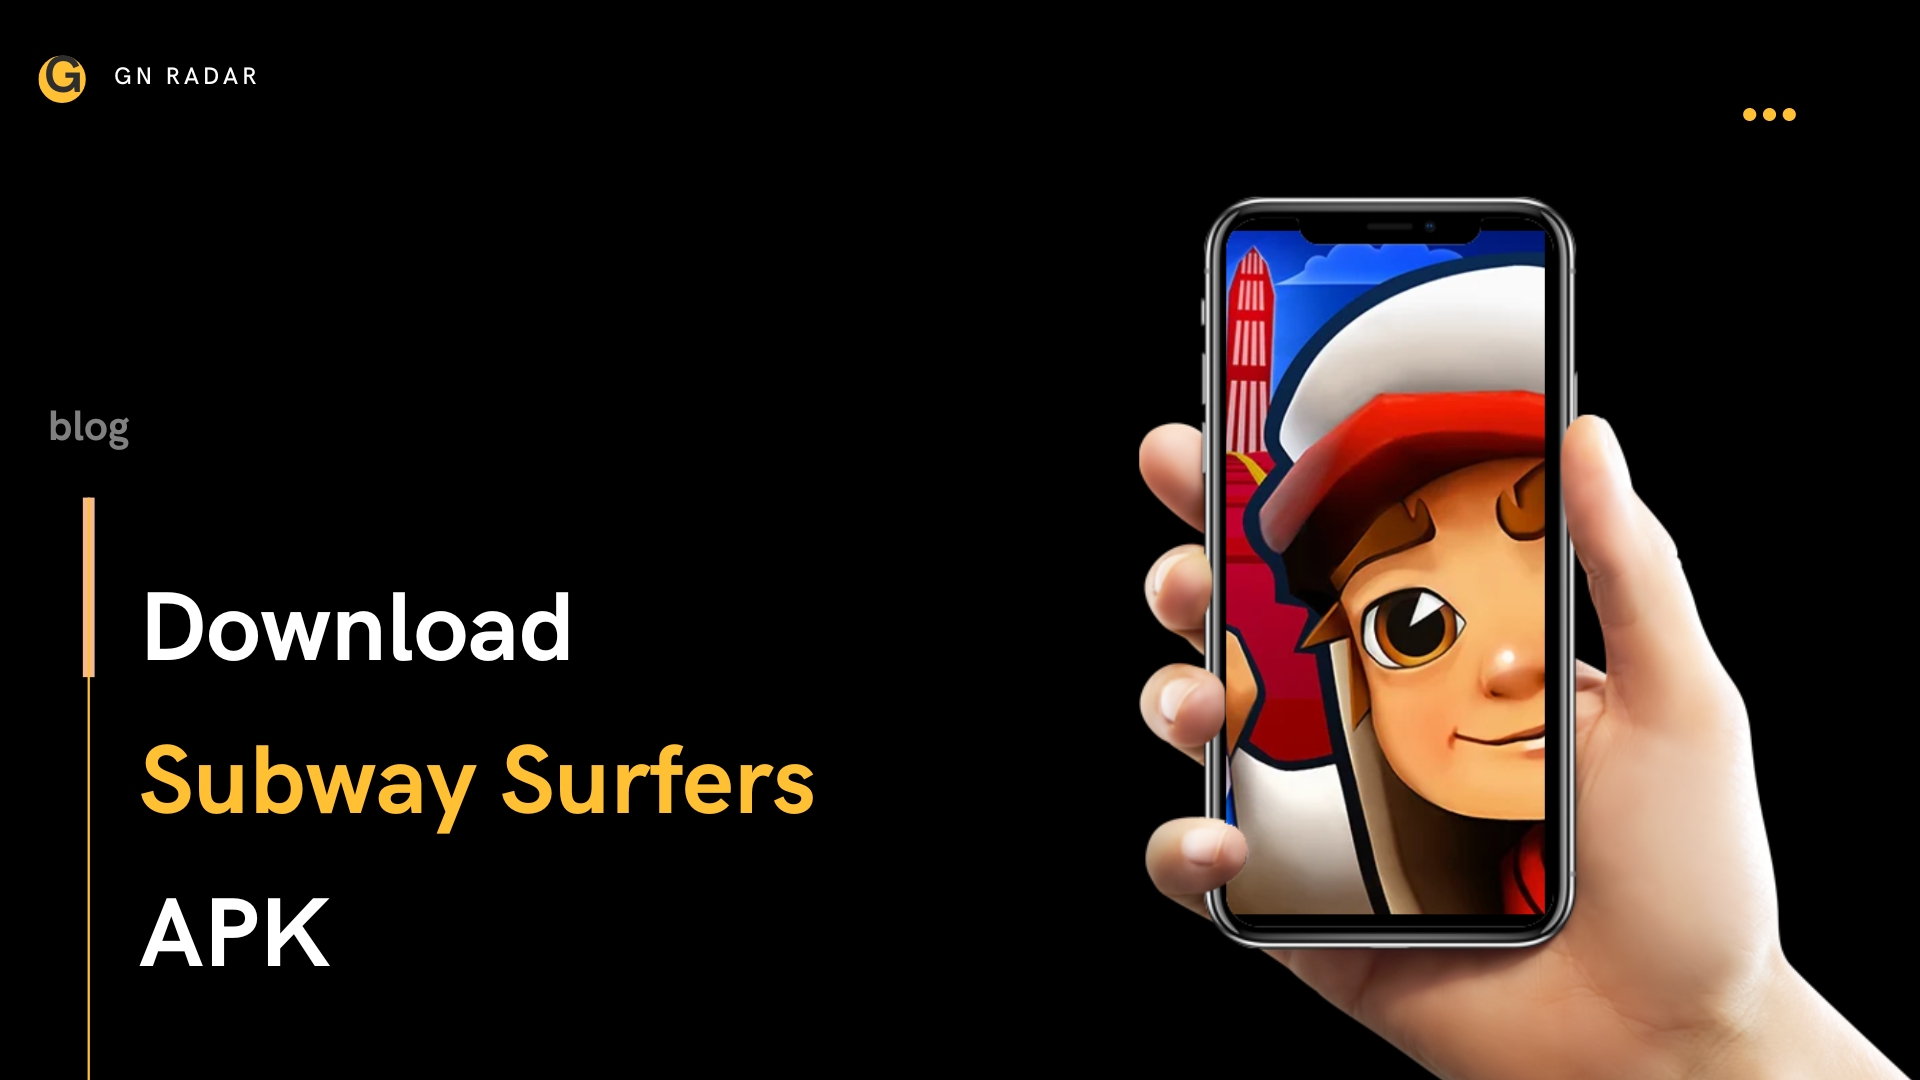 Subway Surfers MOD APK 3.13 Unlimited Coins/Keys - Free Download